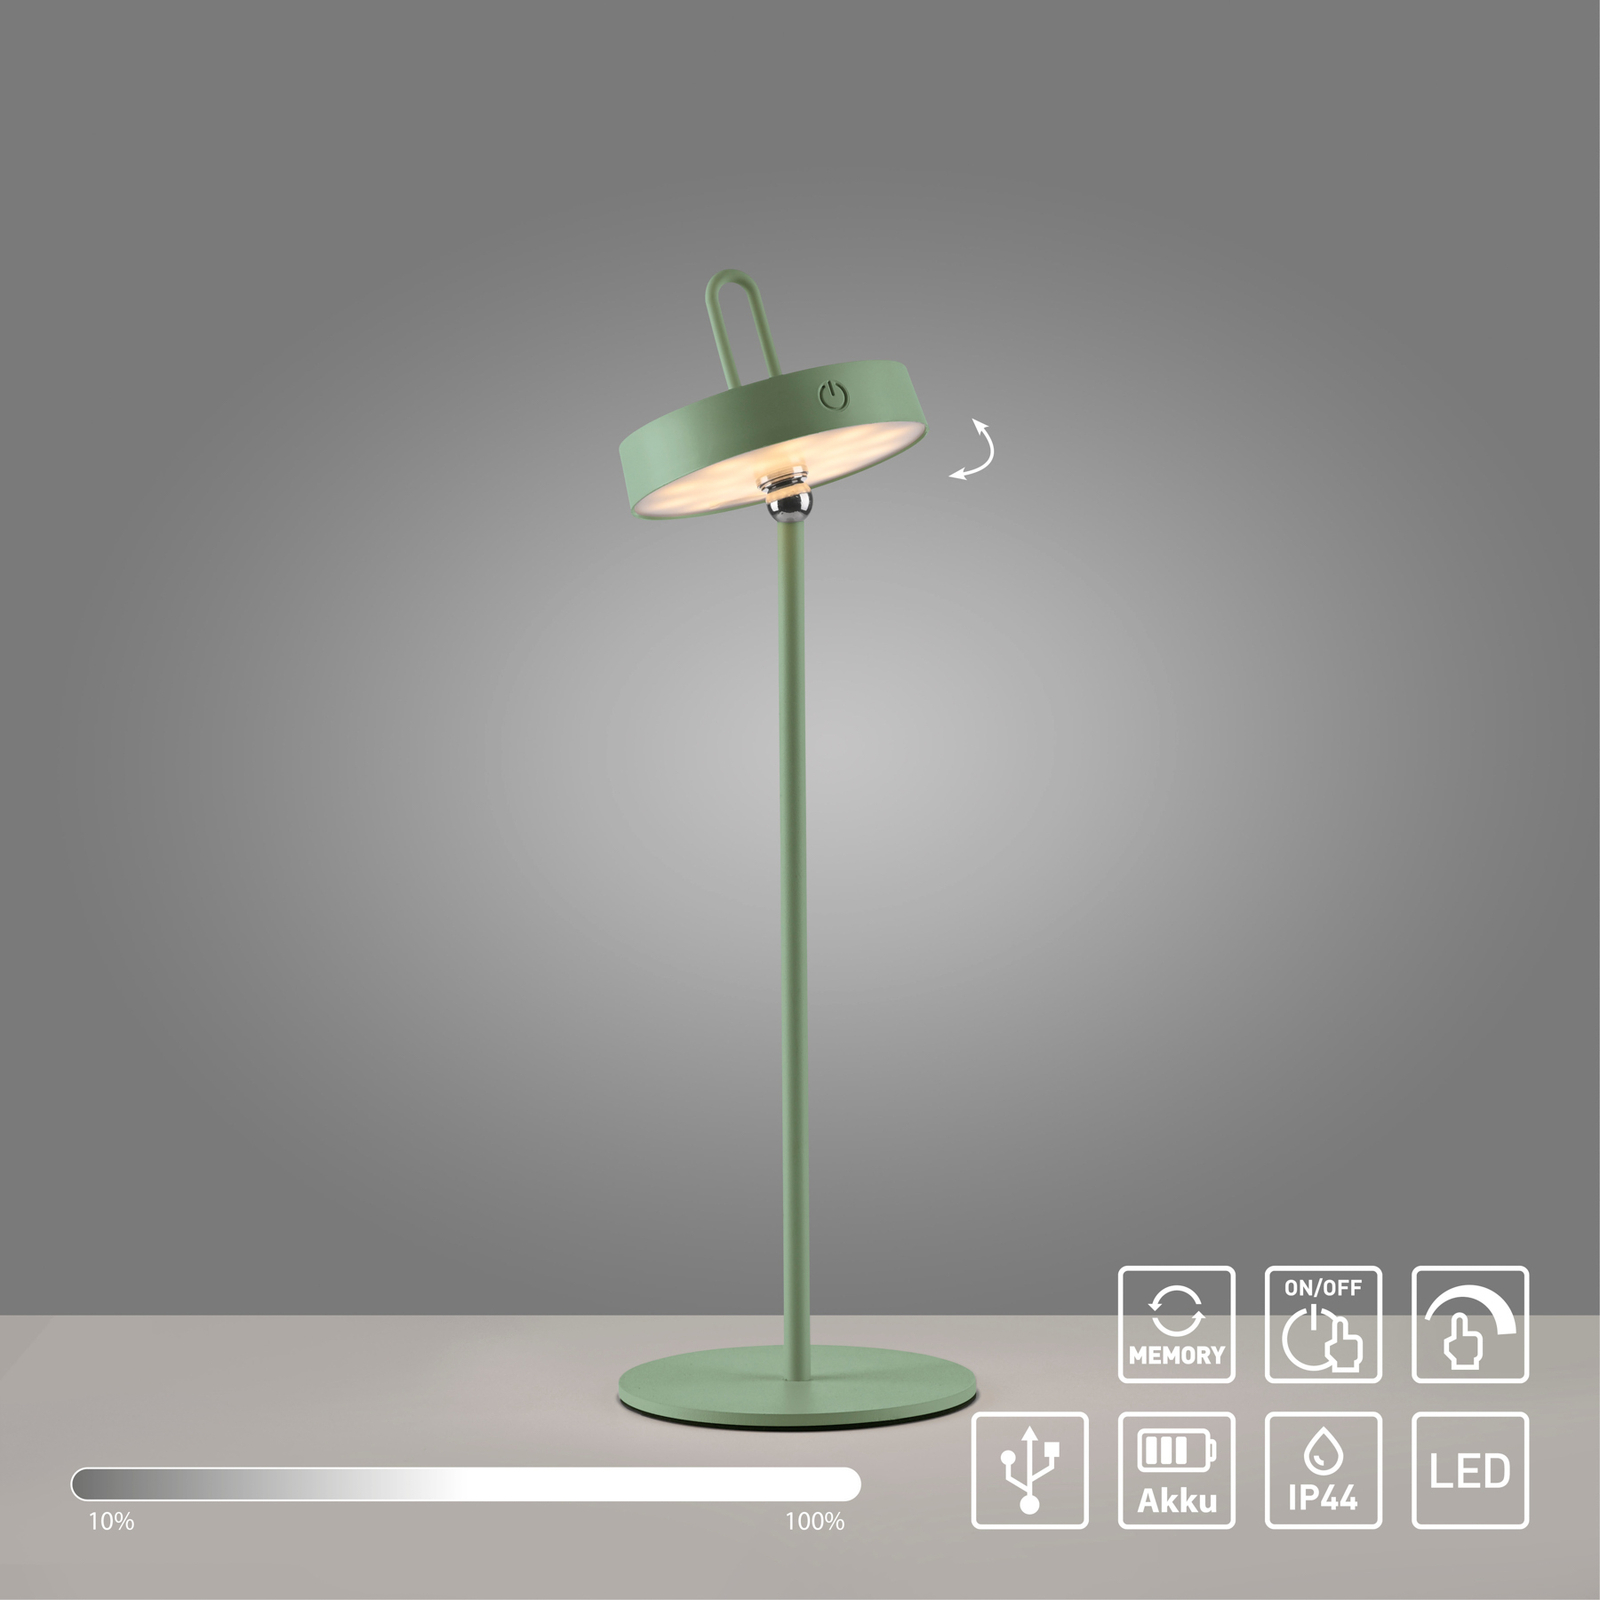 JUST LIGHT. Akumulatorowa lampa stołowa LED Amag, zielona, żelazo, IP44